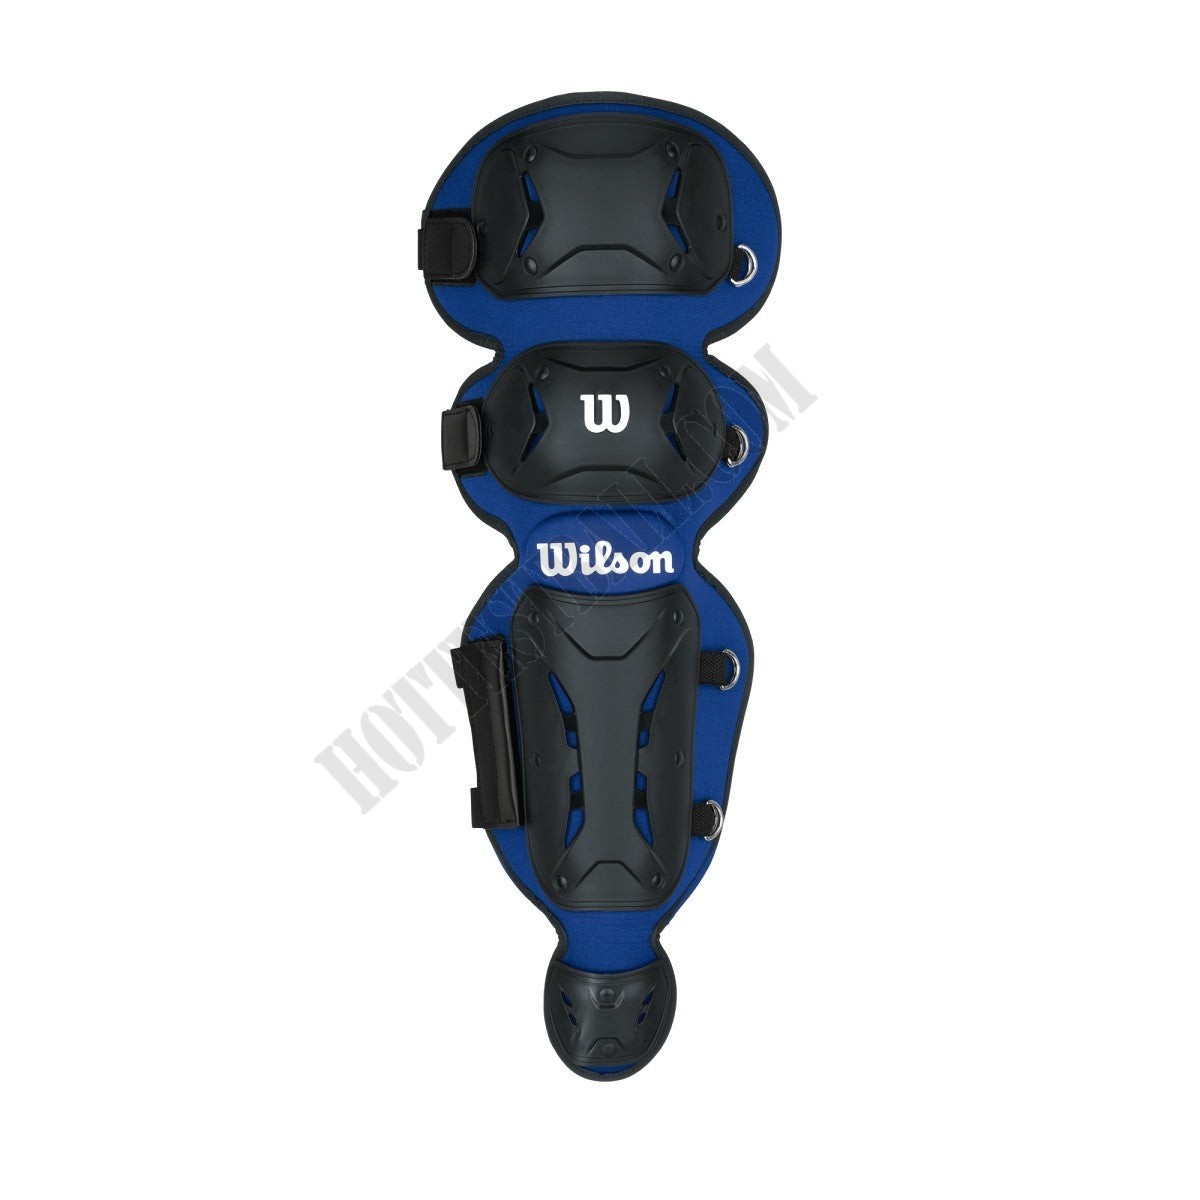 EZ Gear Catcher's Kit - Chicago Cubs - Wilson Discount Store - -3